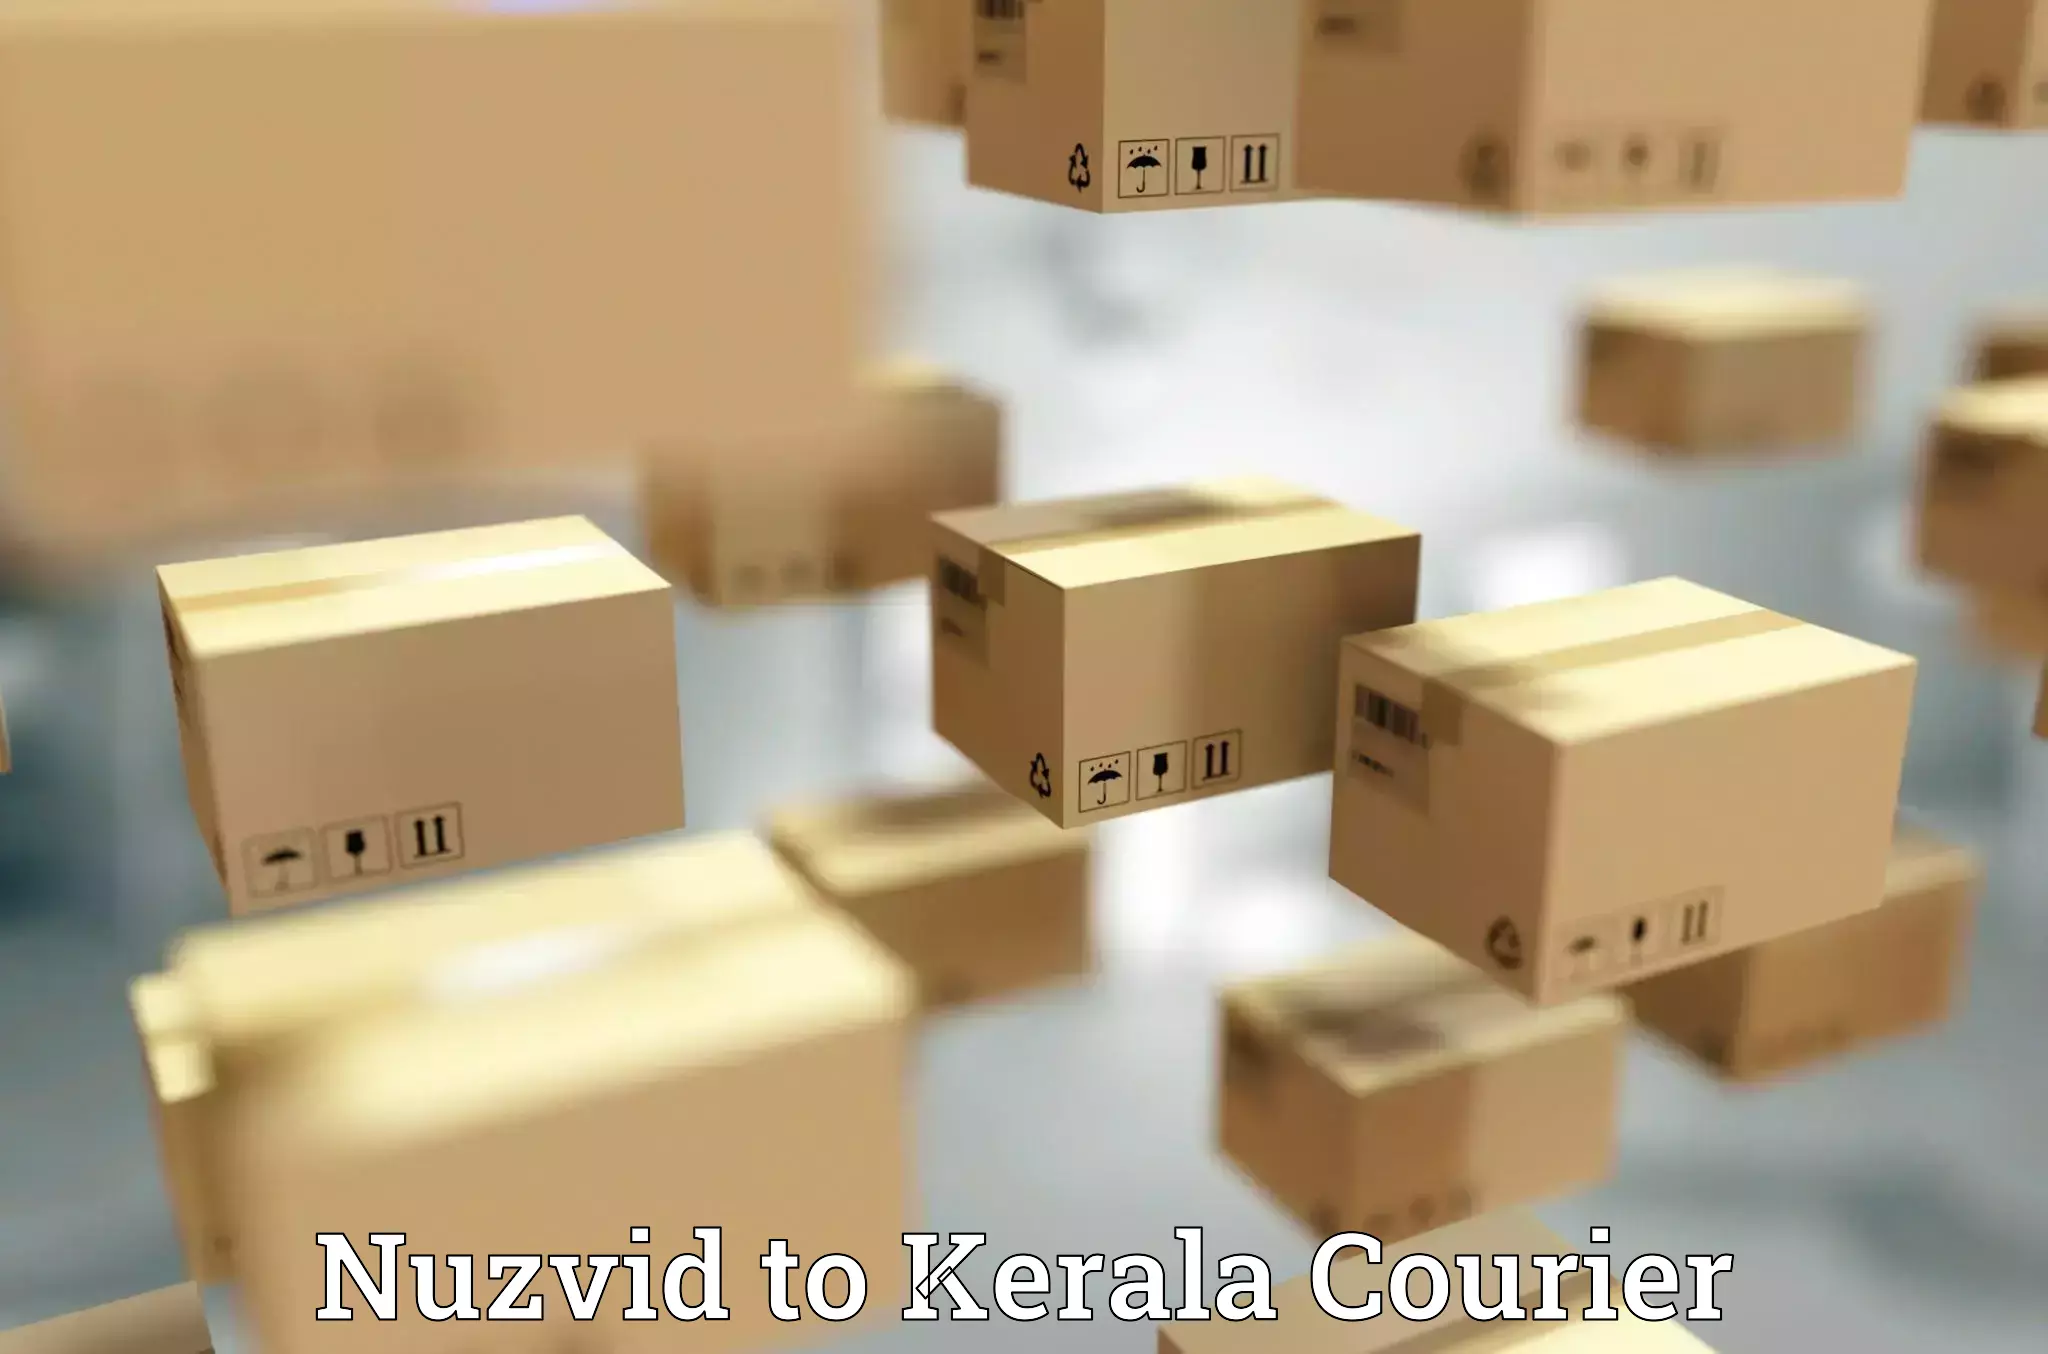 Express mail service Nuzvid to Cochin Port Kochi